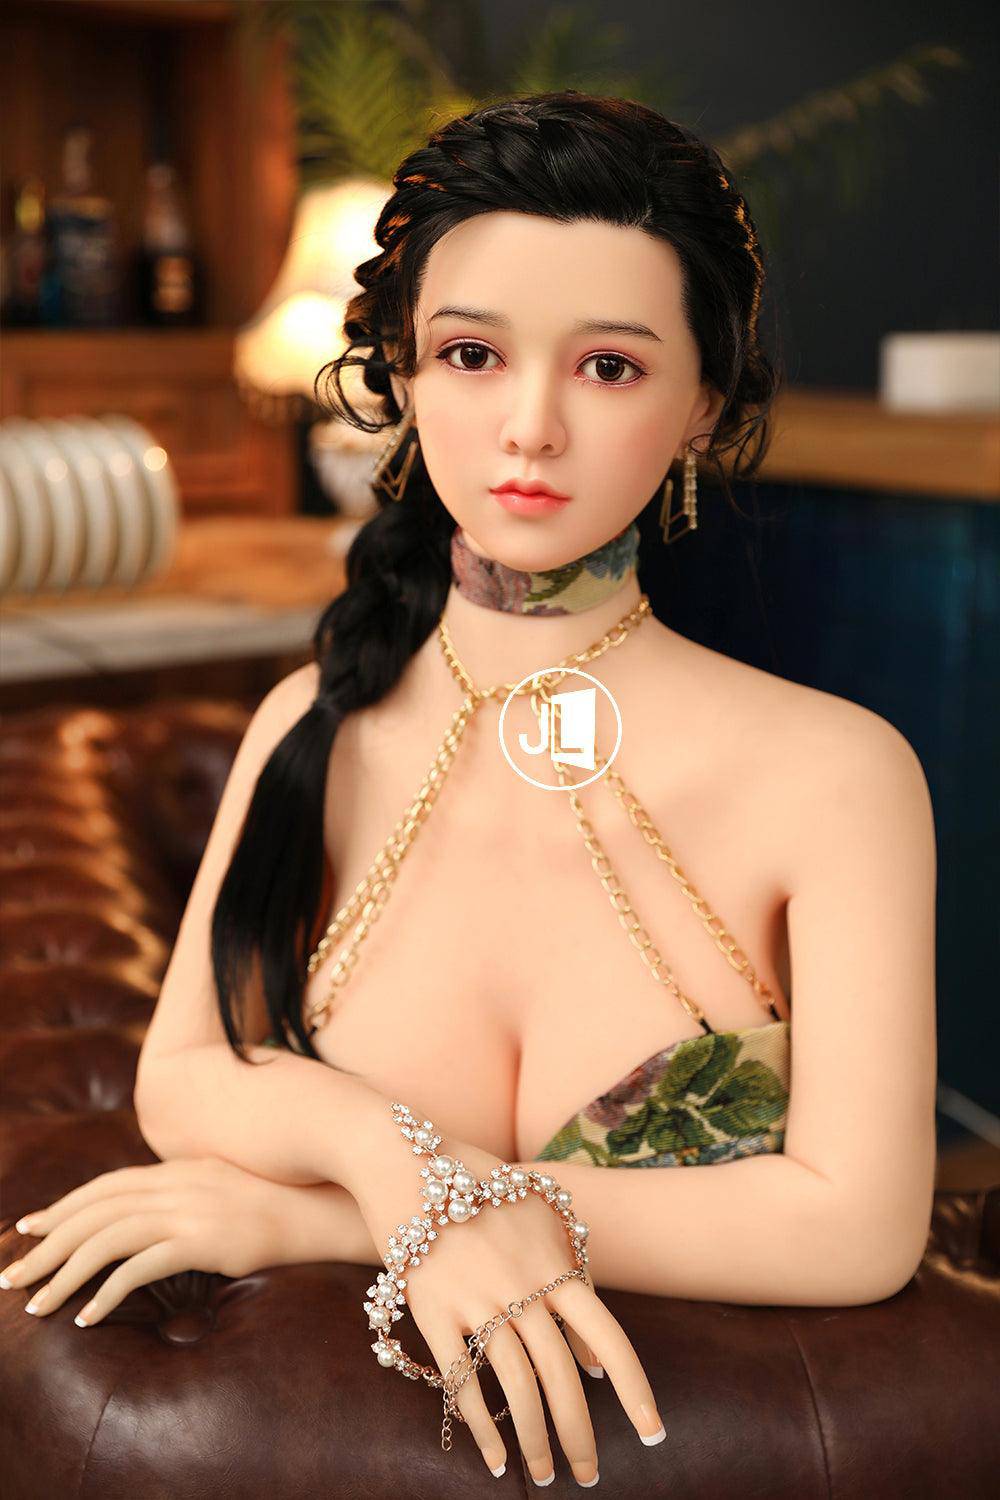 Jarliet | 5ft 2 /158cm Realistic Asian Sex Doll - Carla